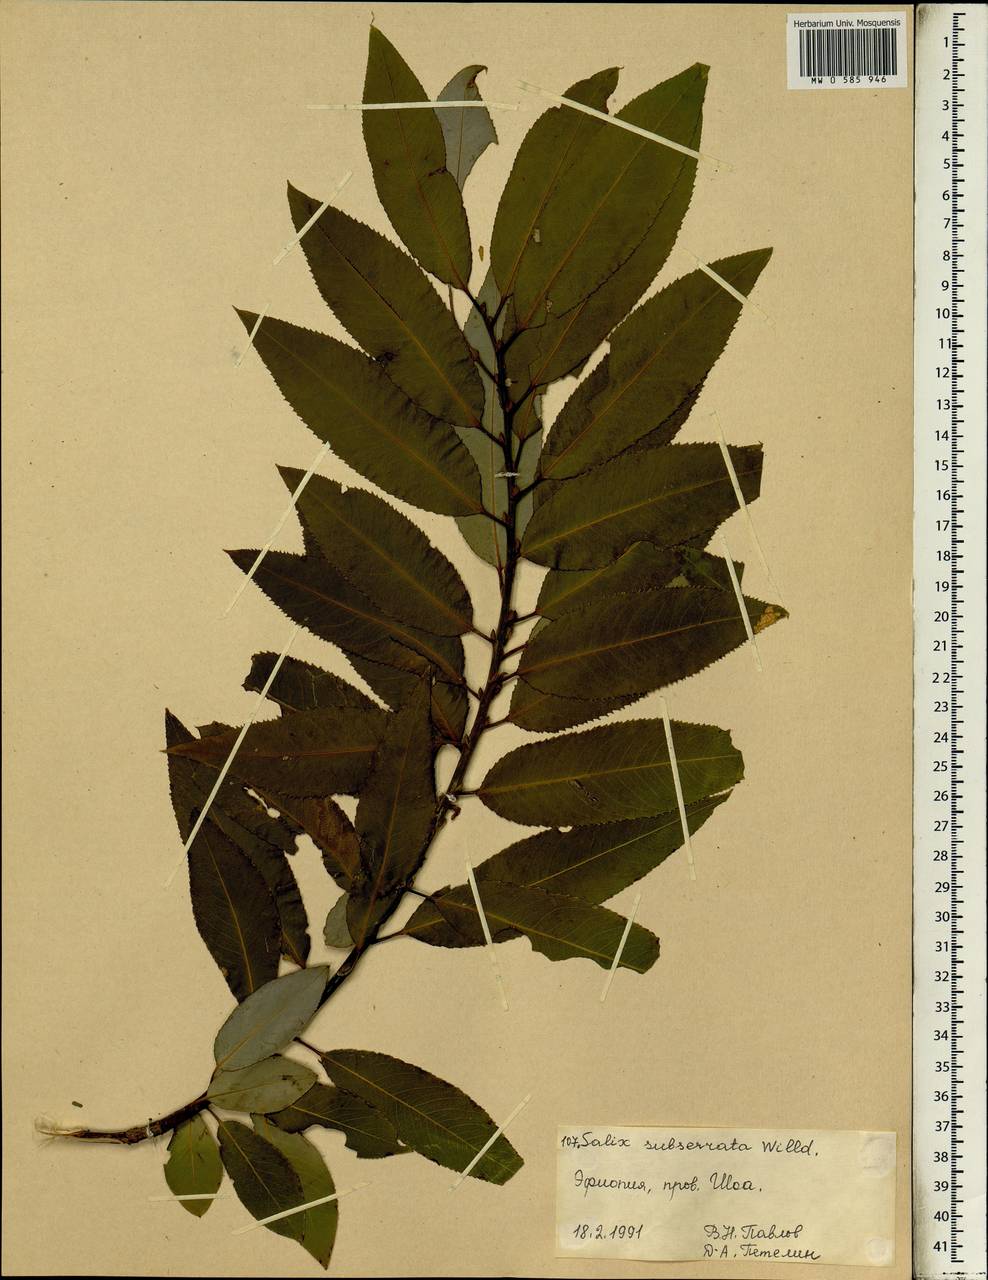 Salix mucronata subsp. subserrata (Willd.) R.H.Archer & Jordaan, Africa (AFR) (Ethiopia)